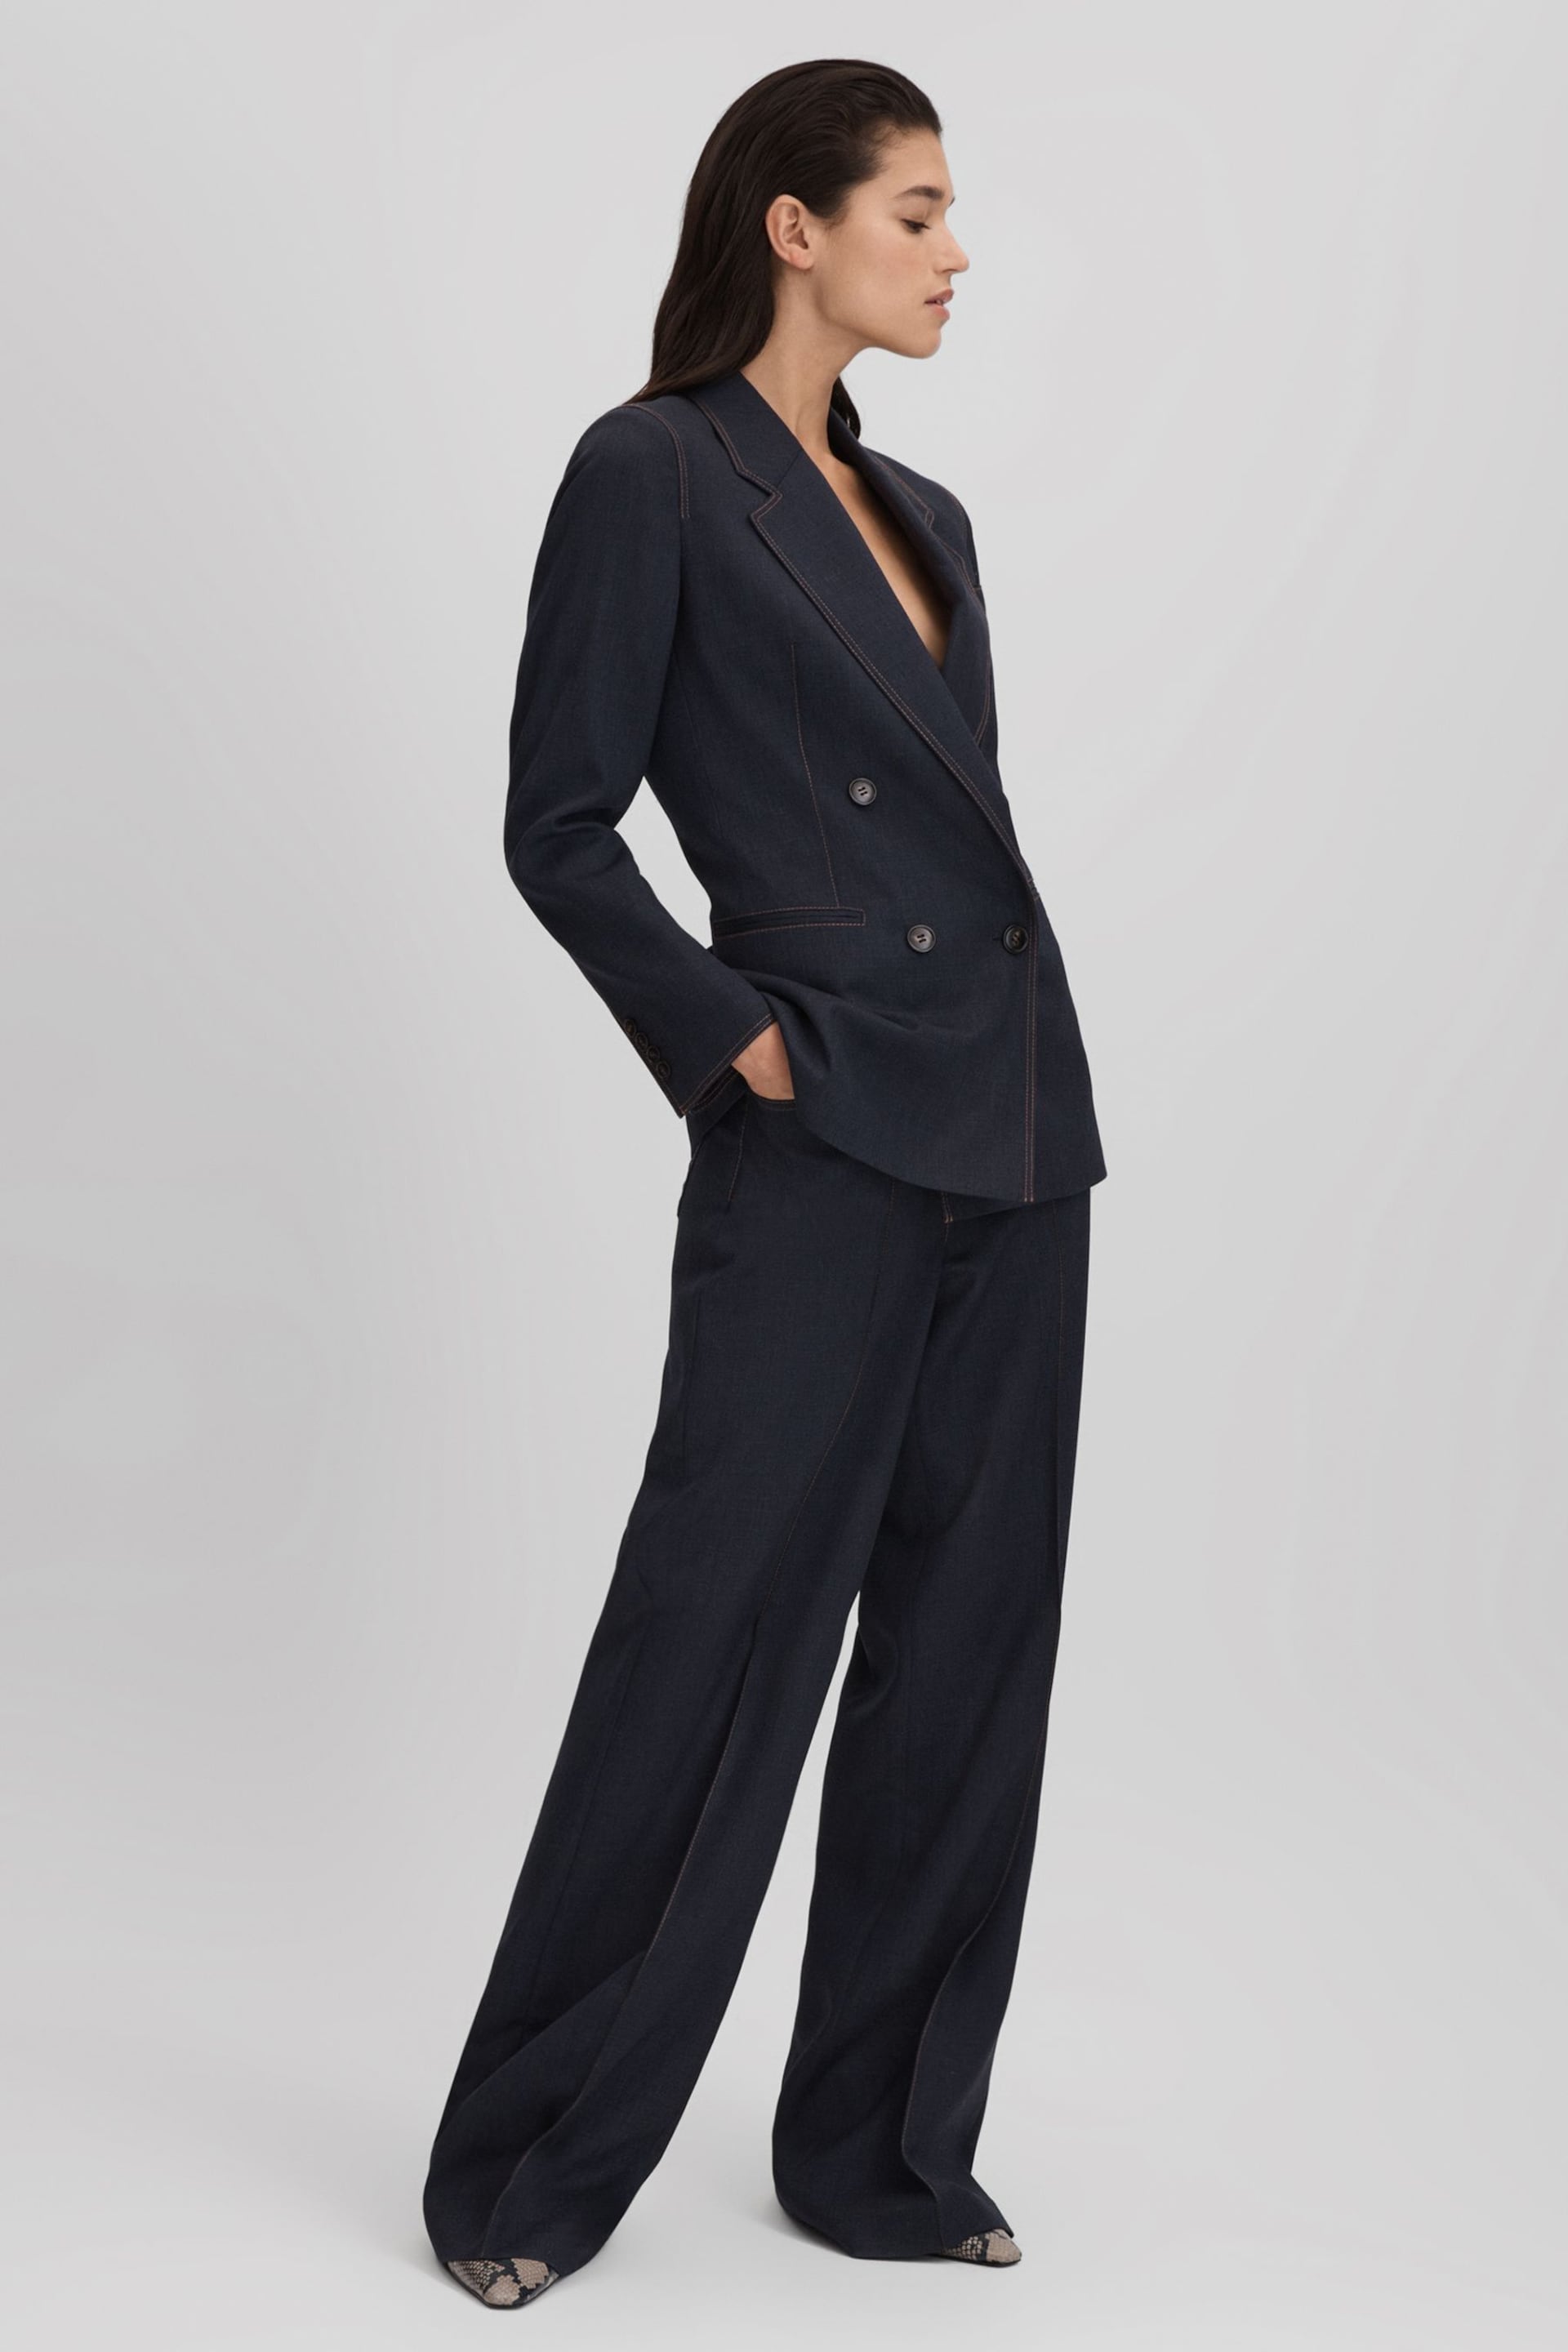 Reiss Navy Raven Wool Blend Denim Look Suit Trousers - Image 6 of 7